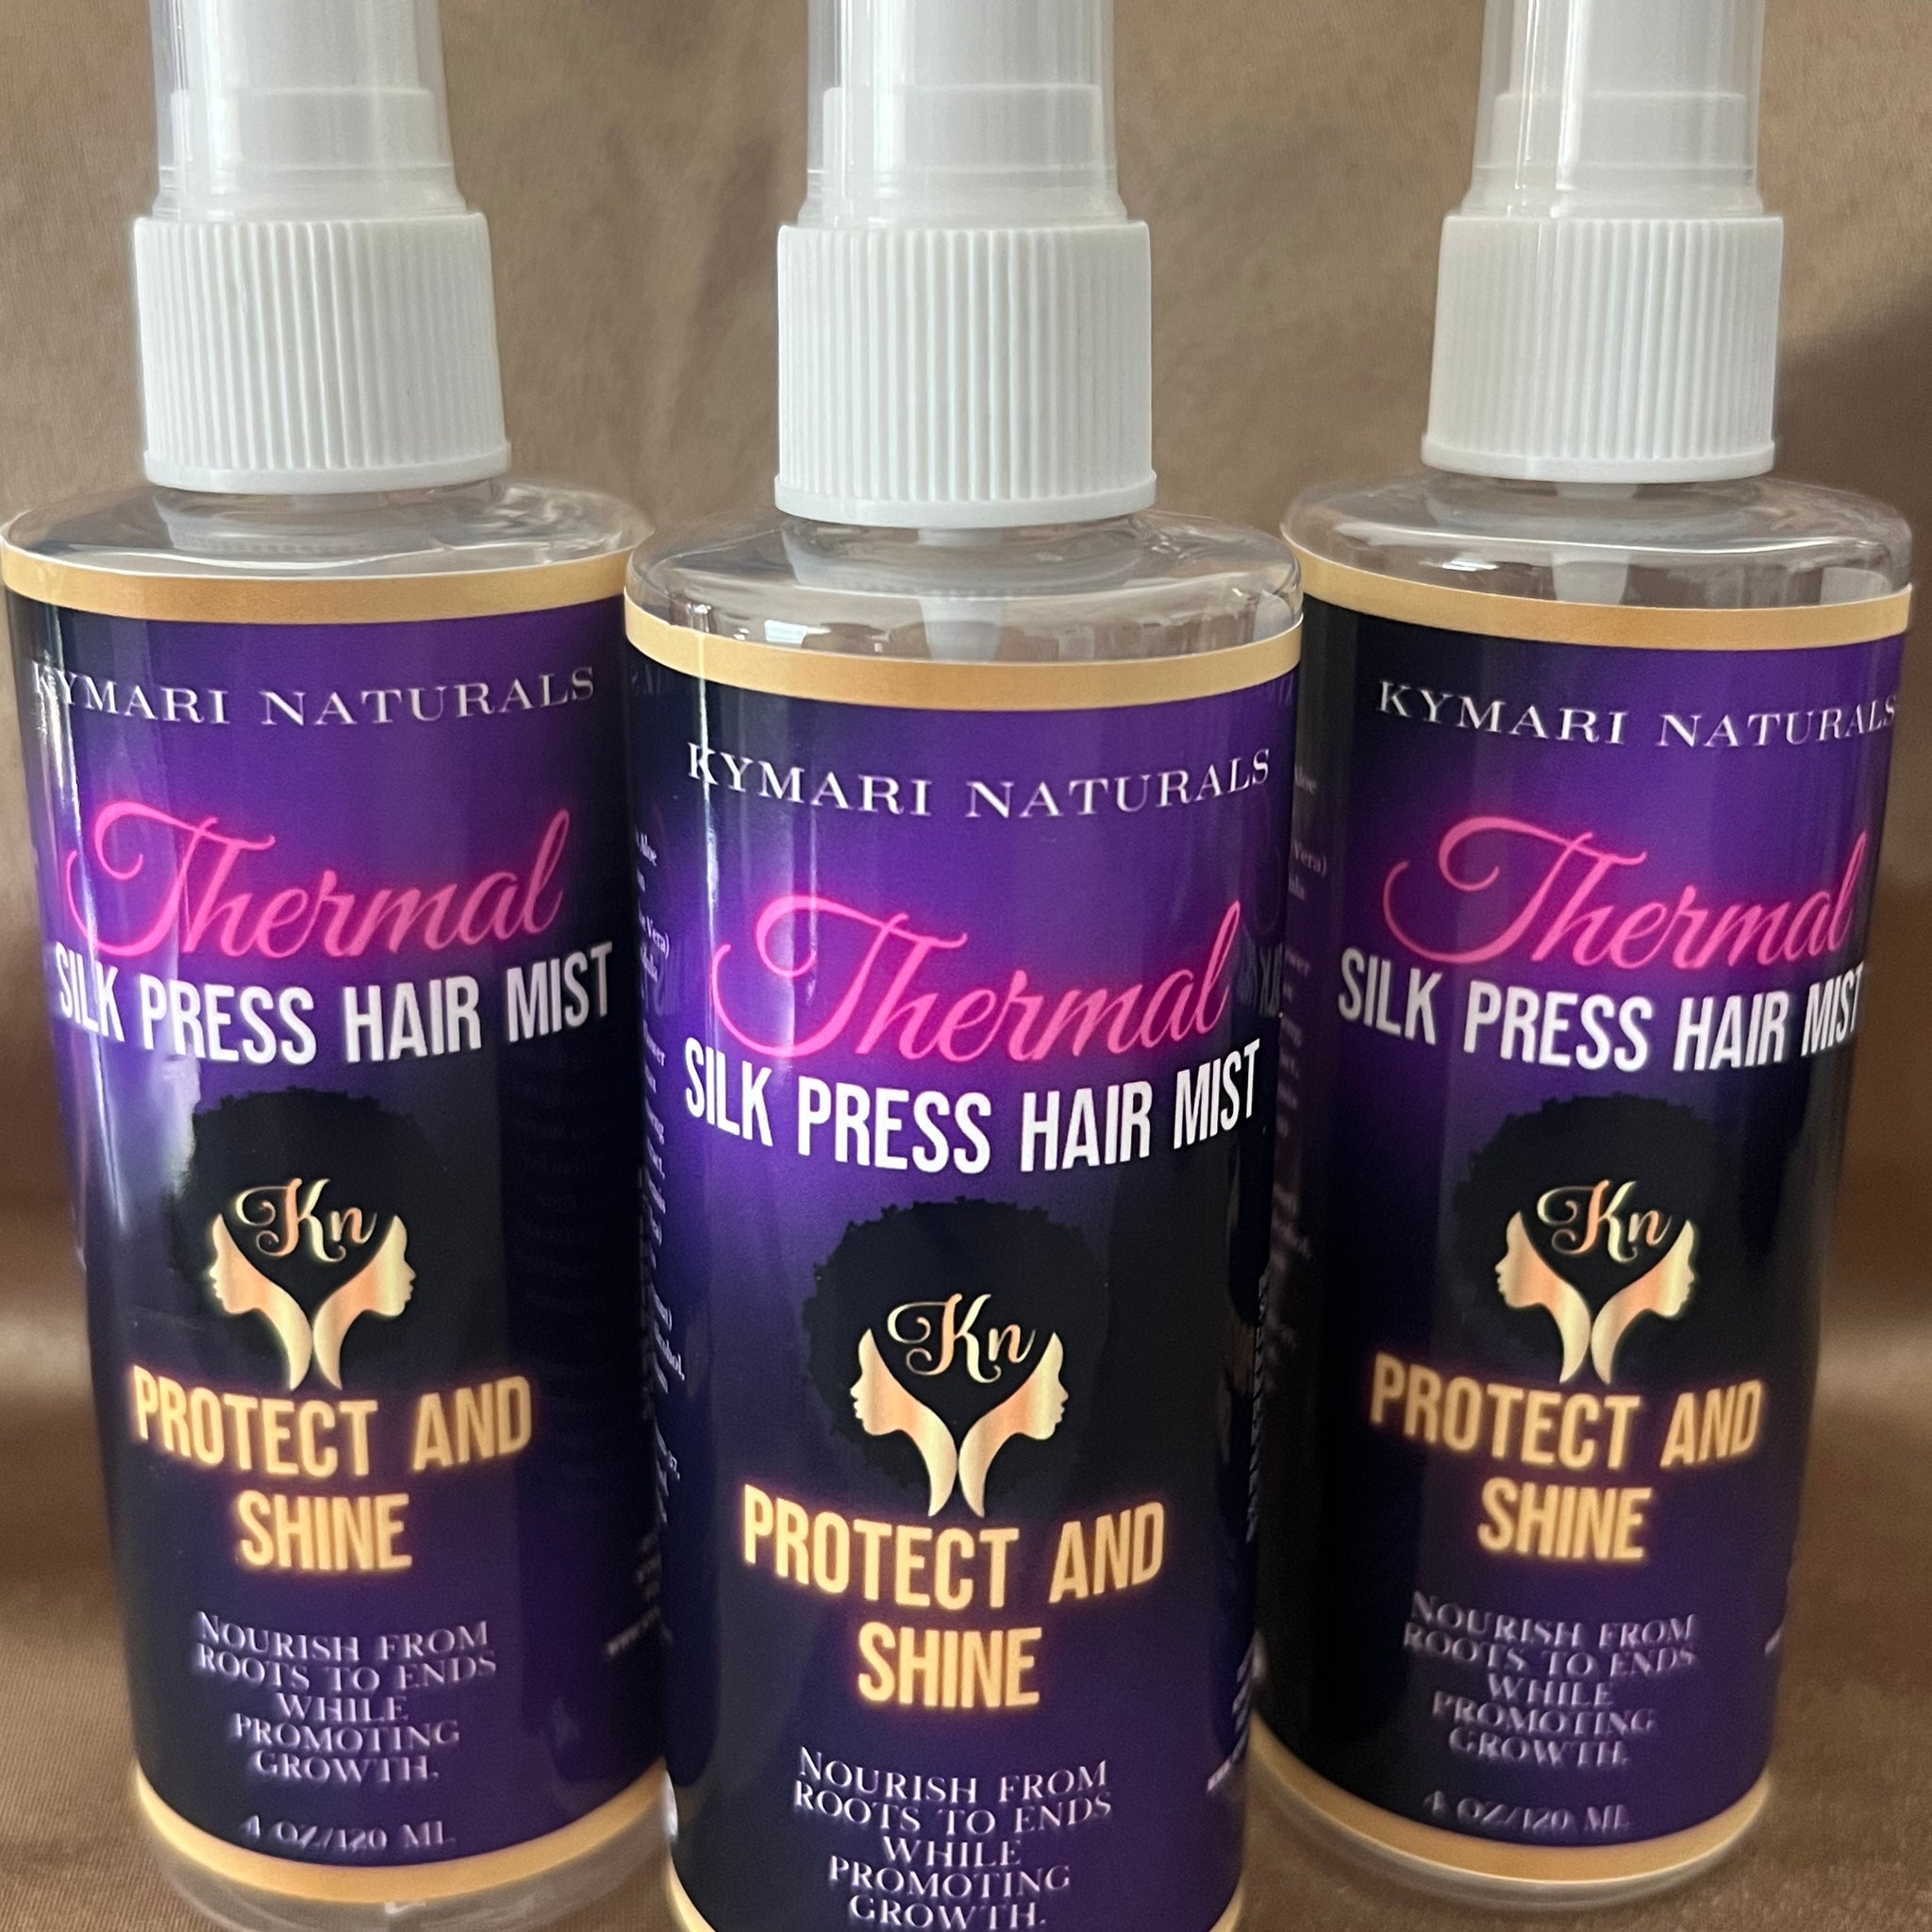 Thermal Silk Press Hair Mist